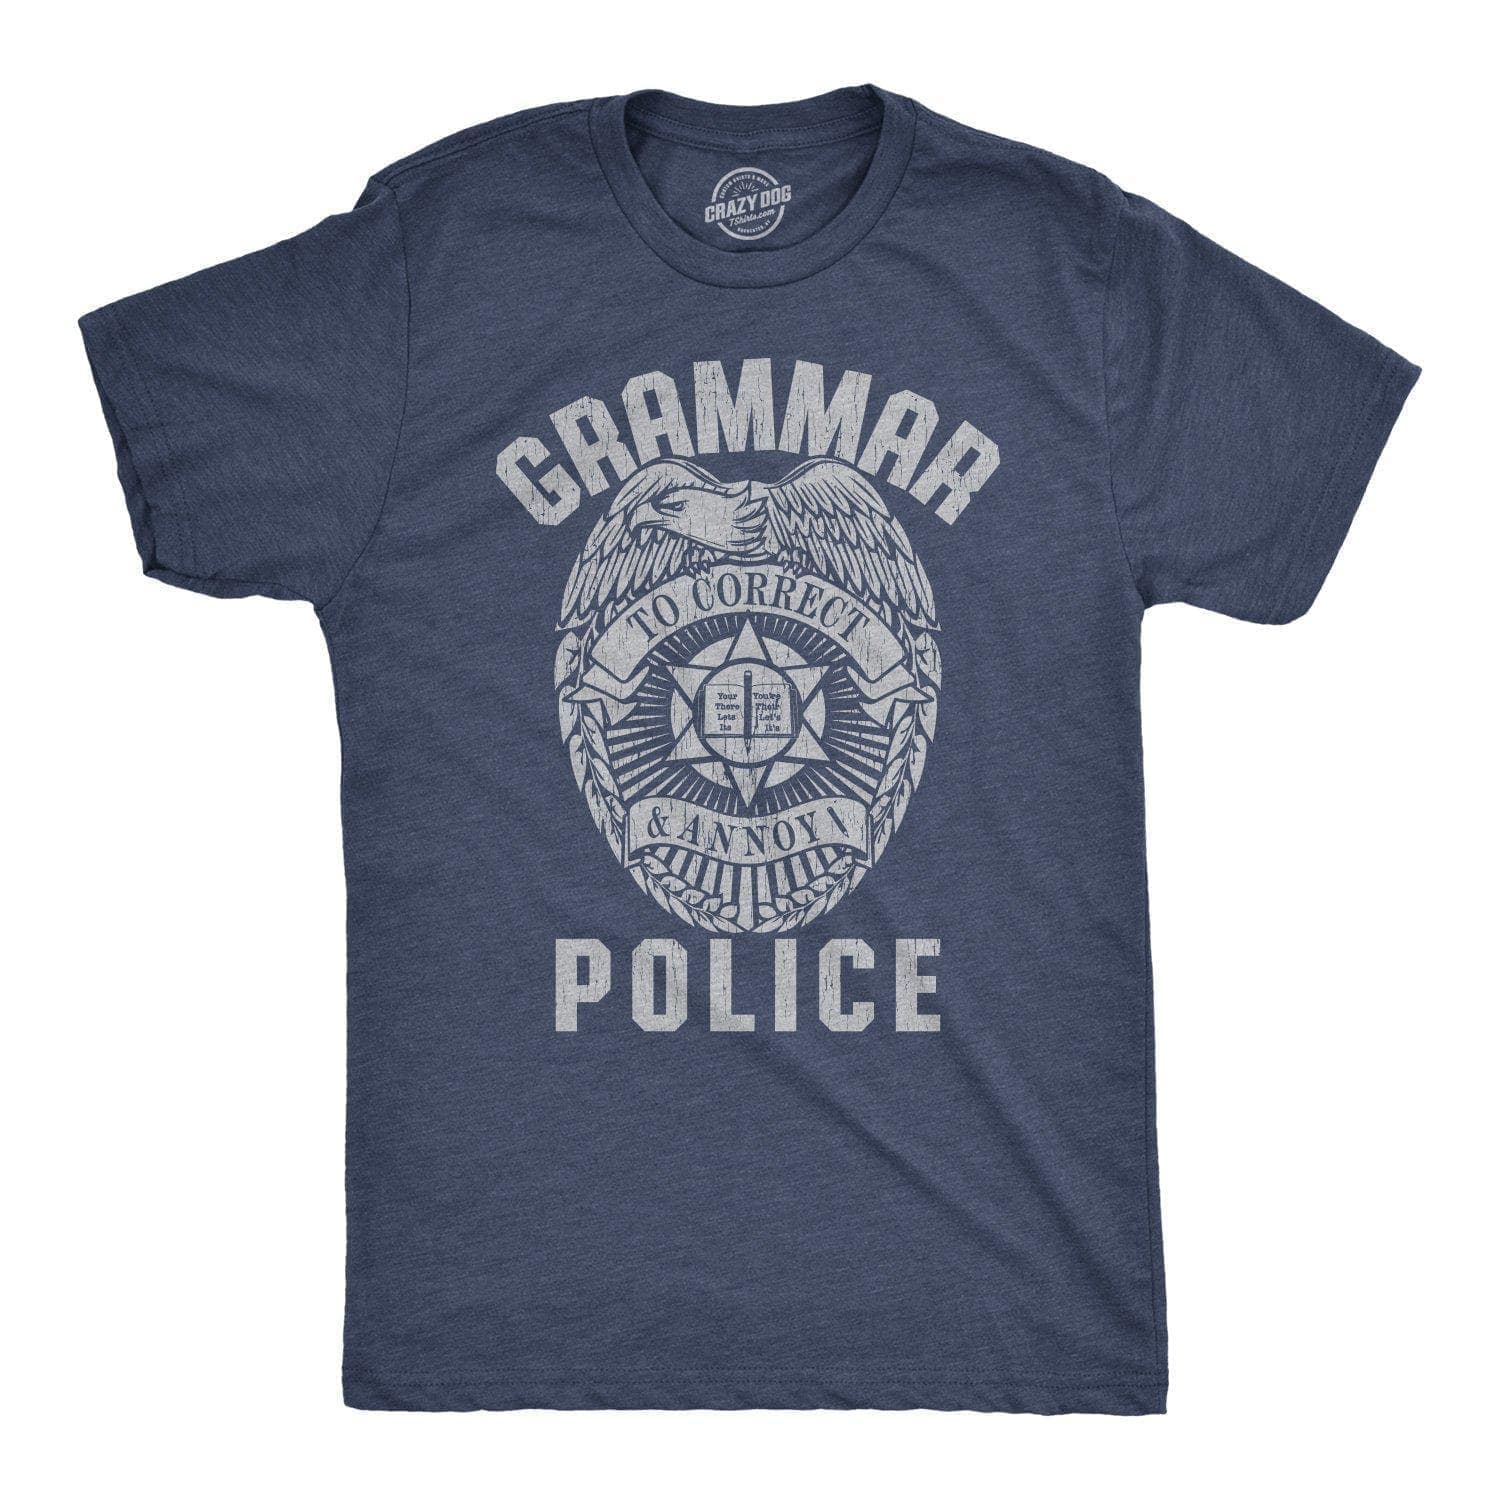 Grammar Police Men's Tshirt - Crazy Dog T-Shirts